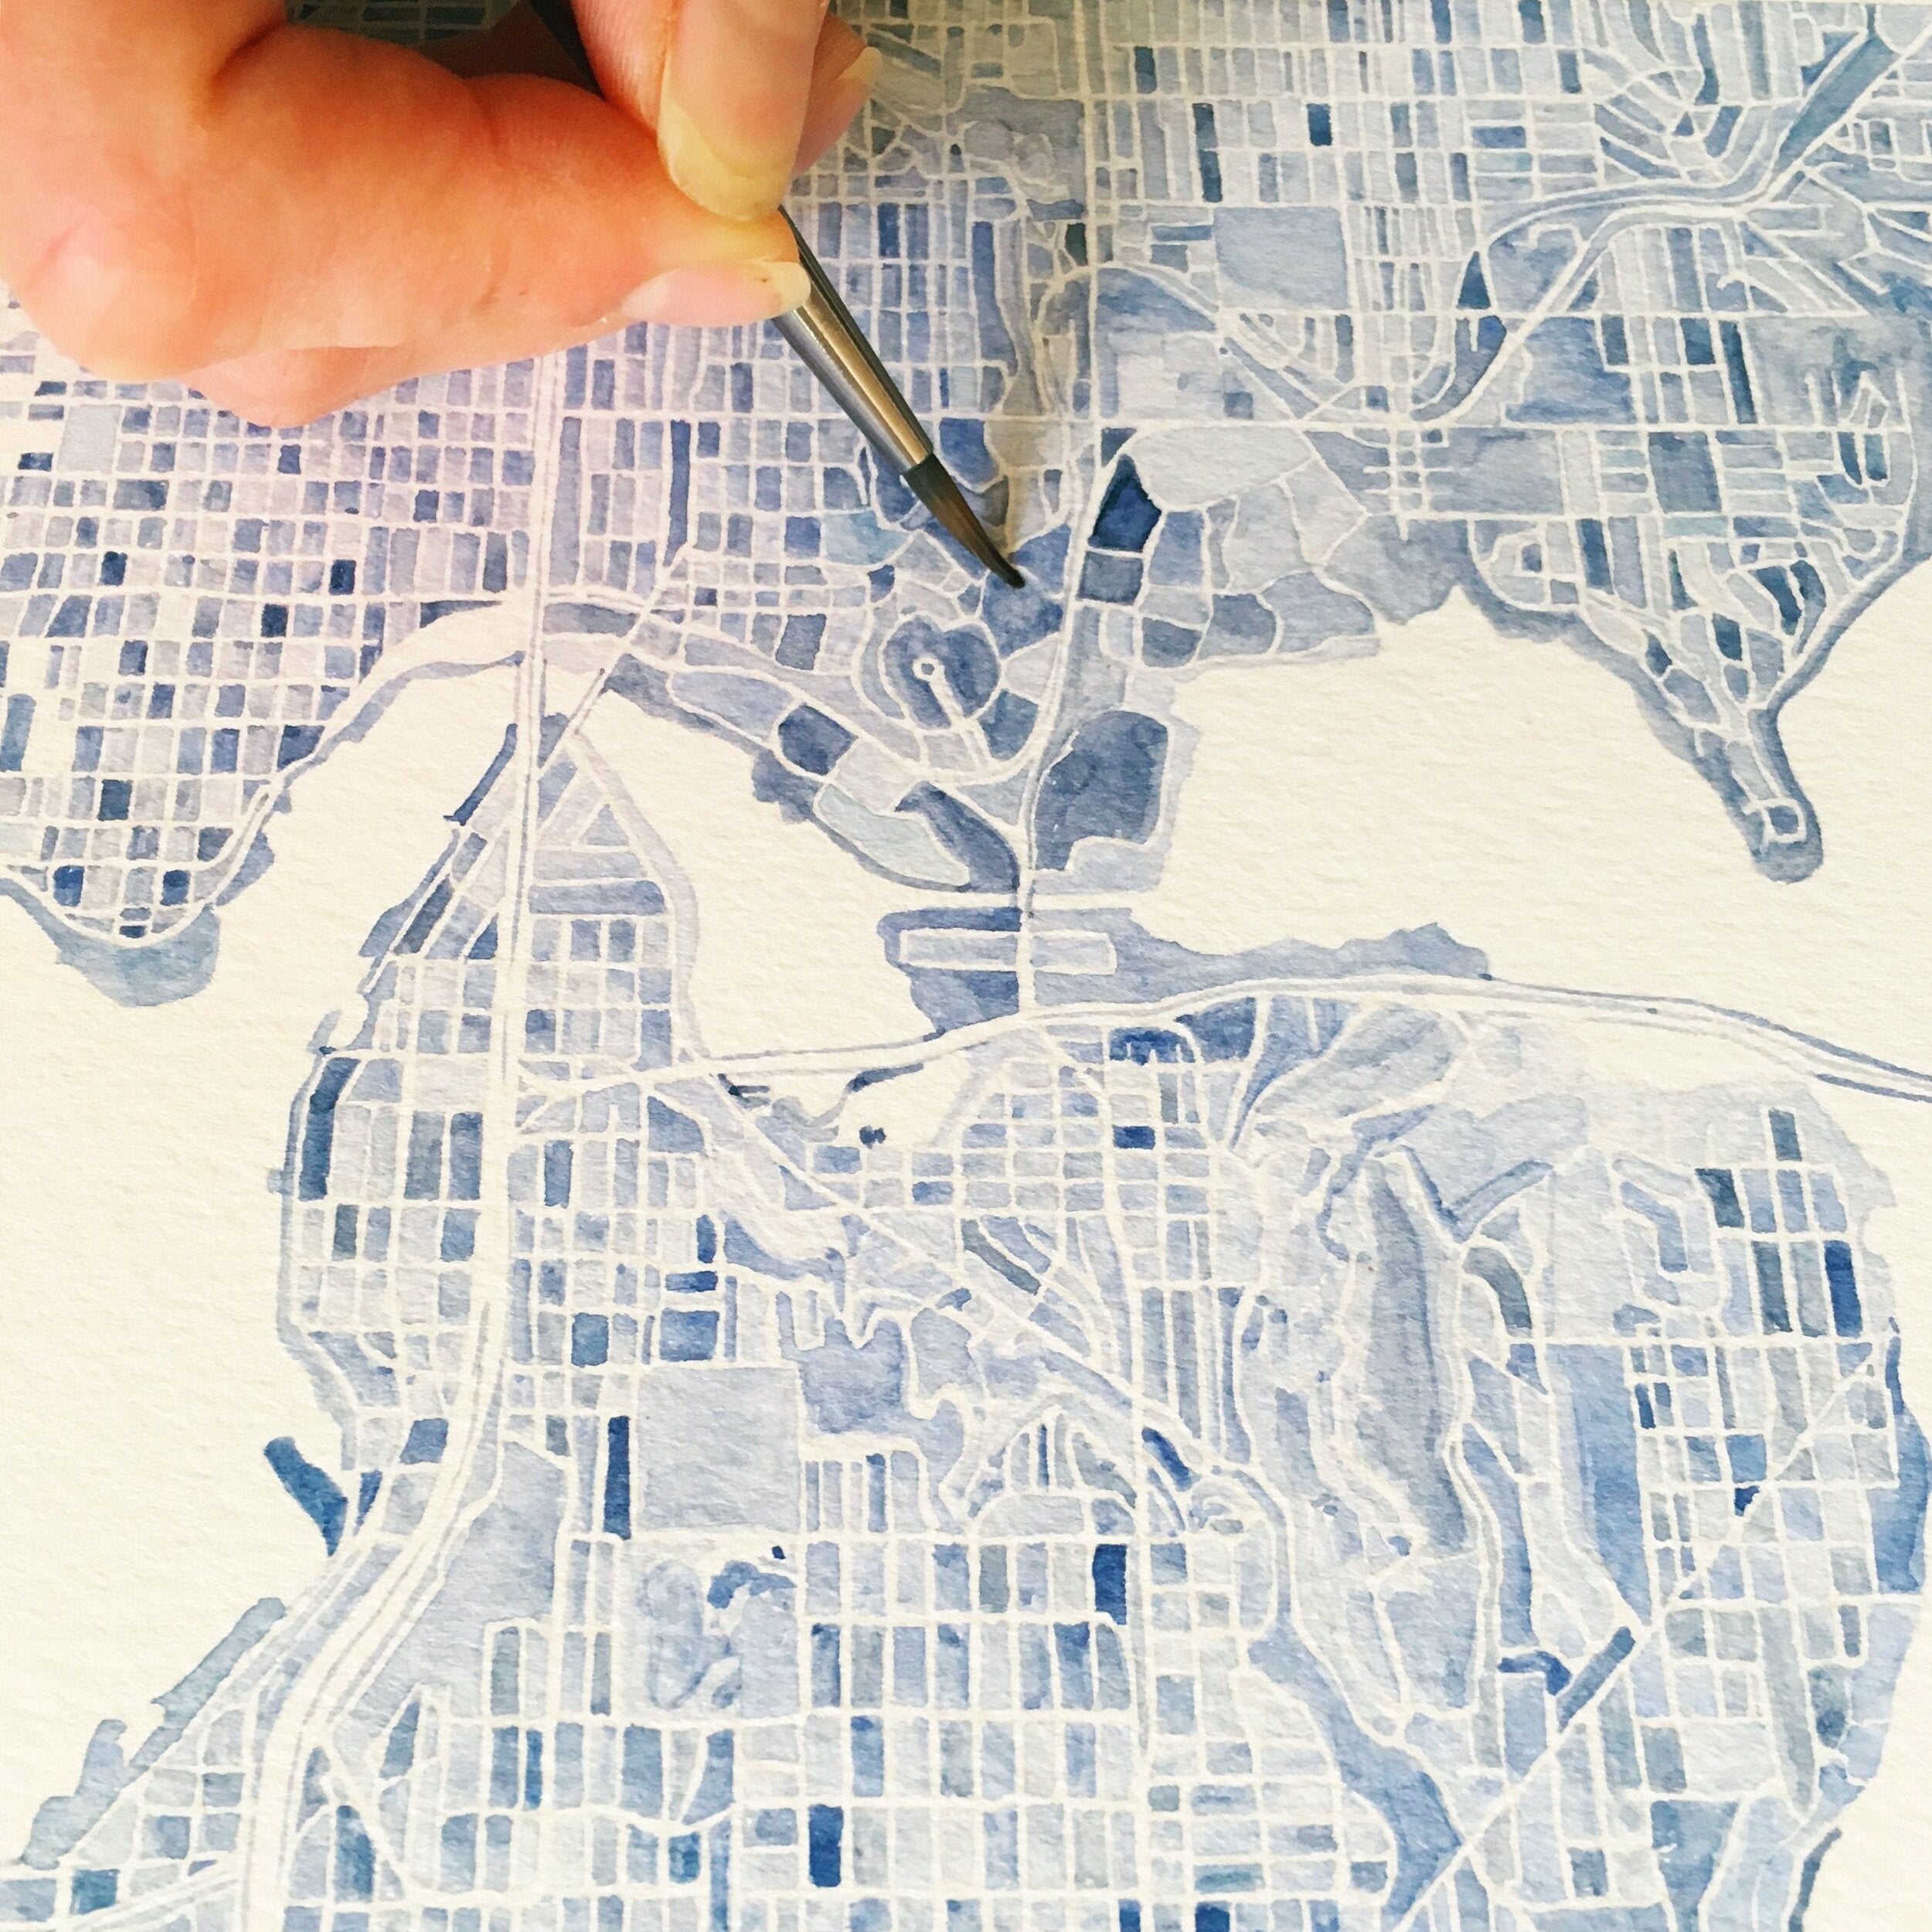 SEATTLE Watercolor City Blocks Map: ORIGINAL PAINTING (Commission)